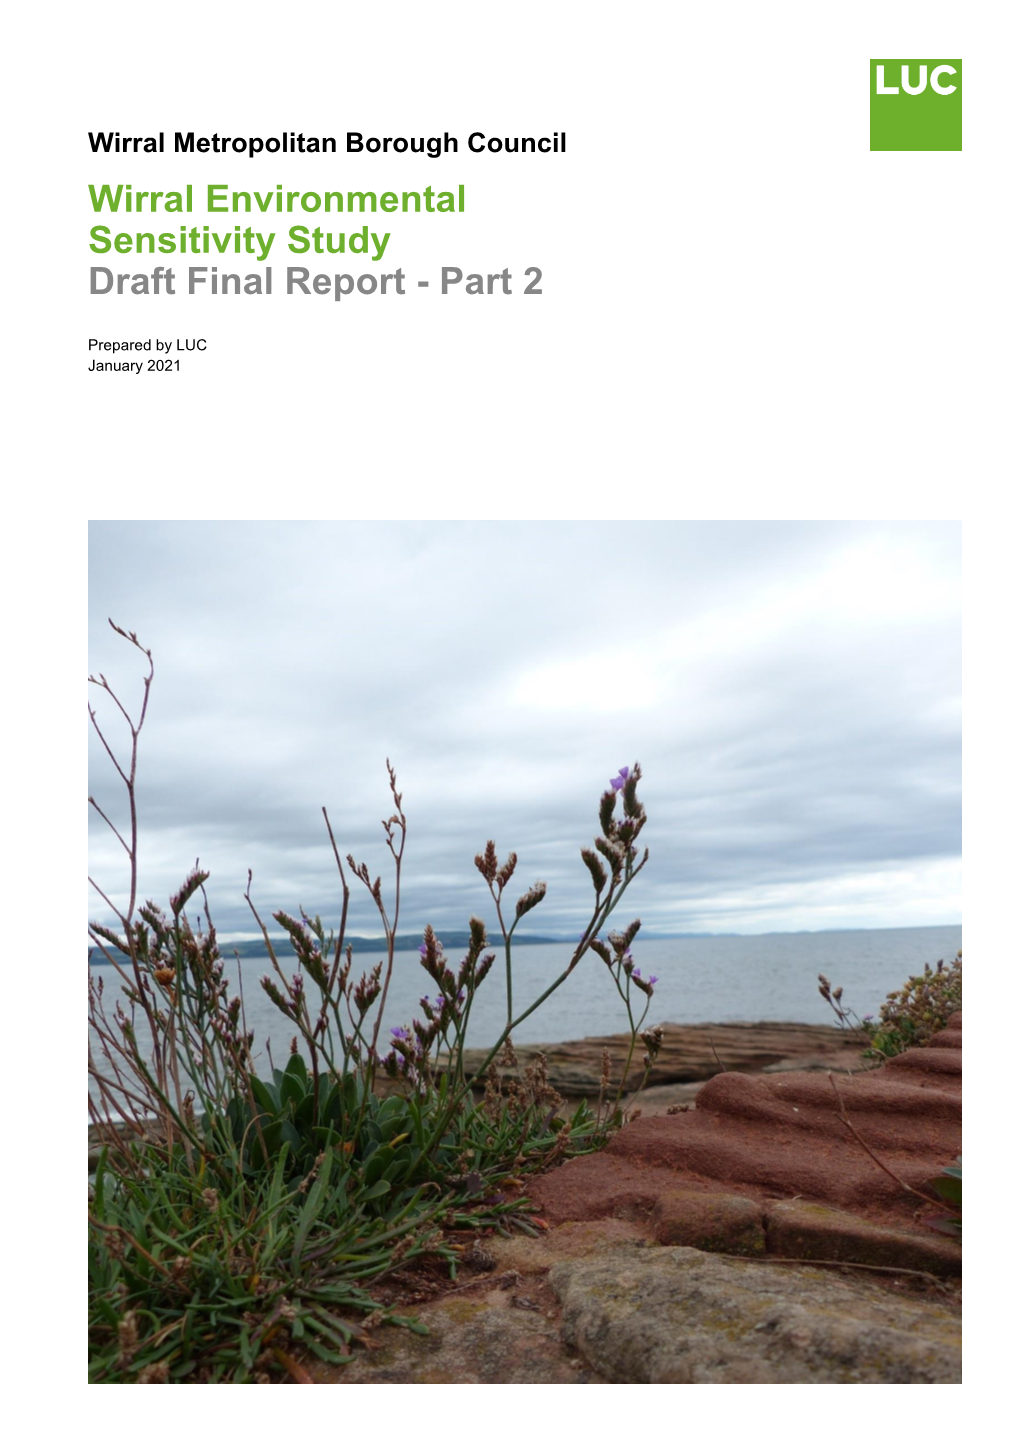 Wirral Environmental Sensitivity Study Draft Final Report - Part 2